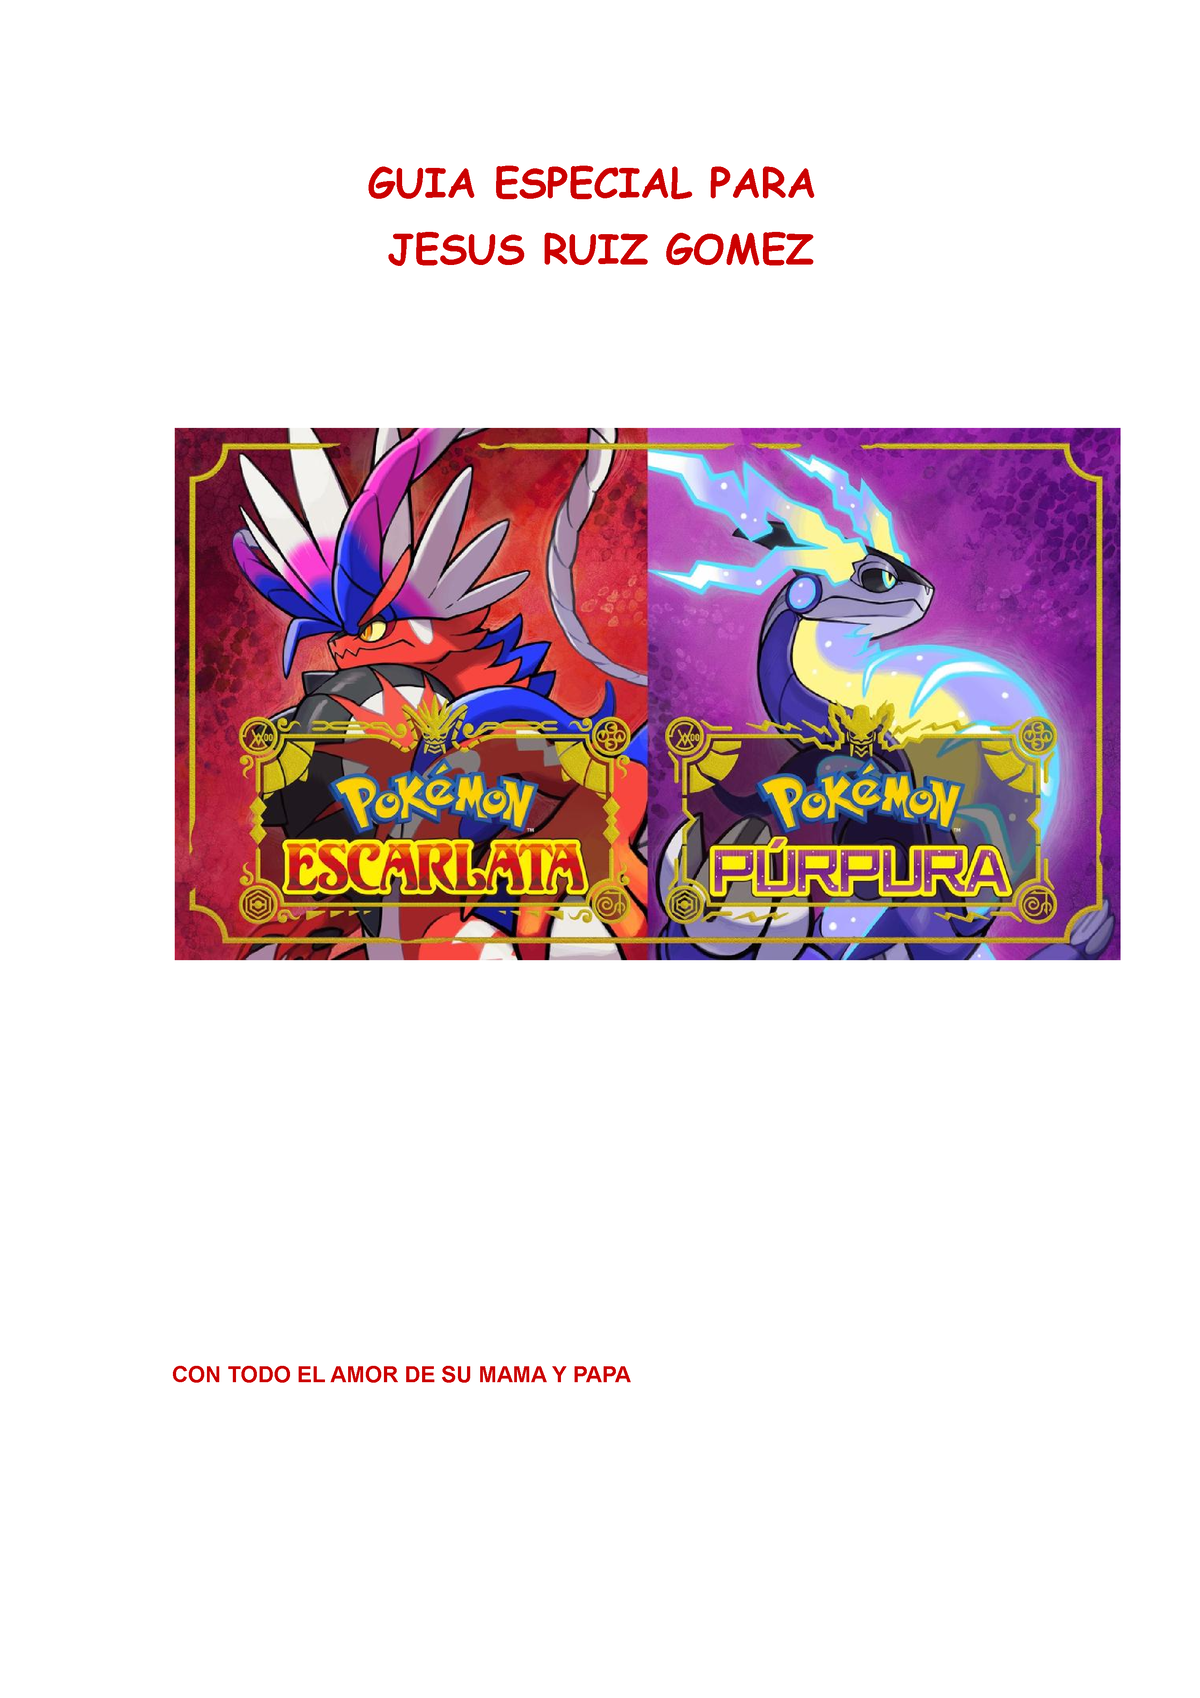 Pokémon Escarlata y Púrpura: orden recomendado de gimnasios